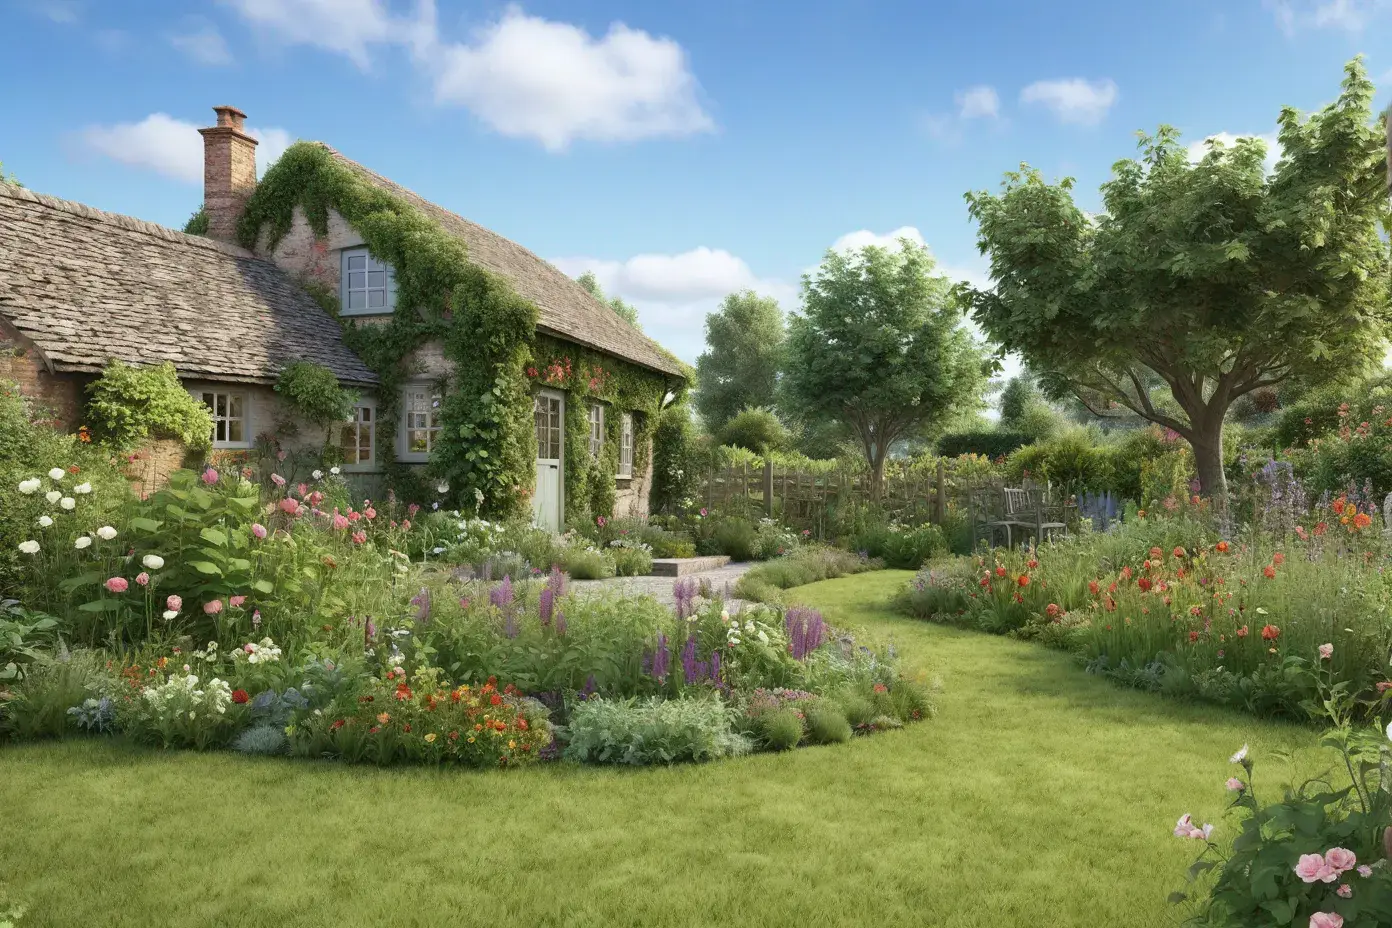 Fully stylized like an English Cottage Garden